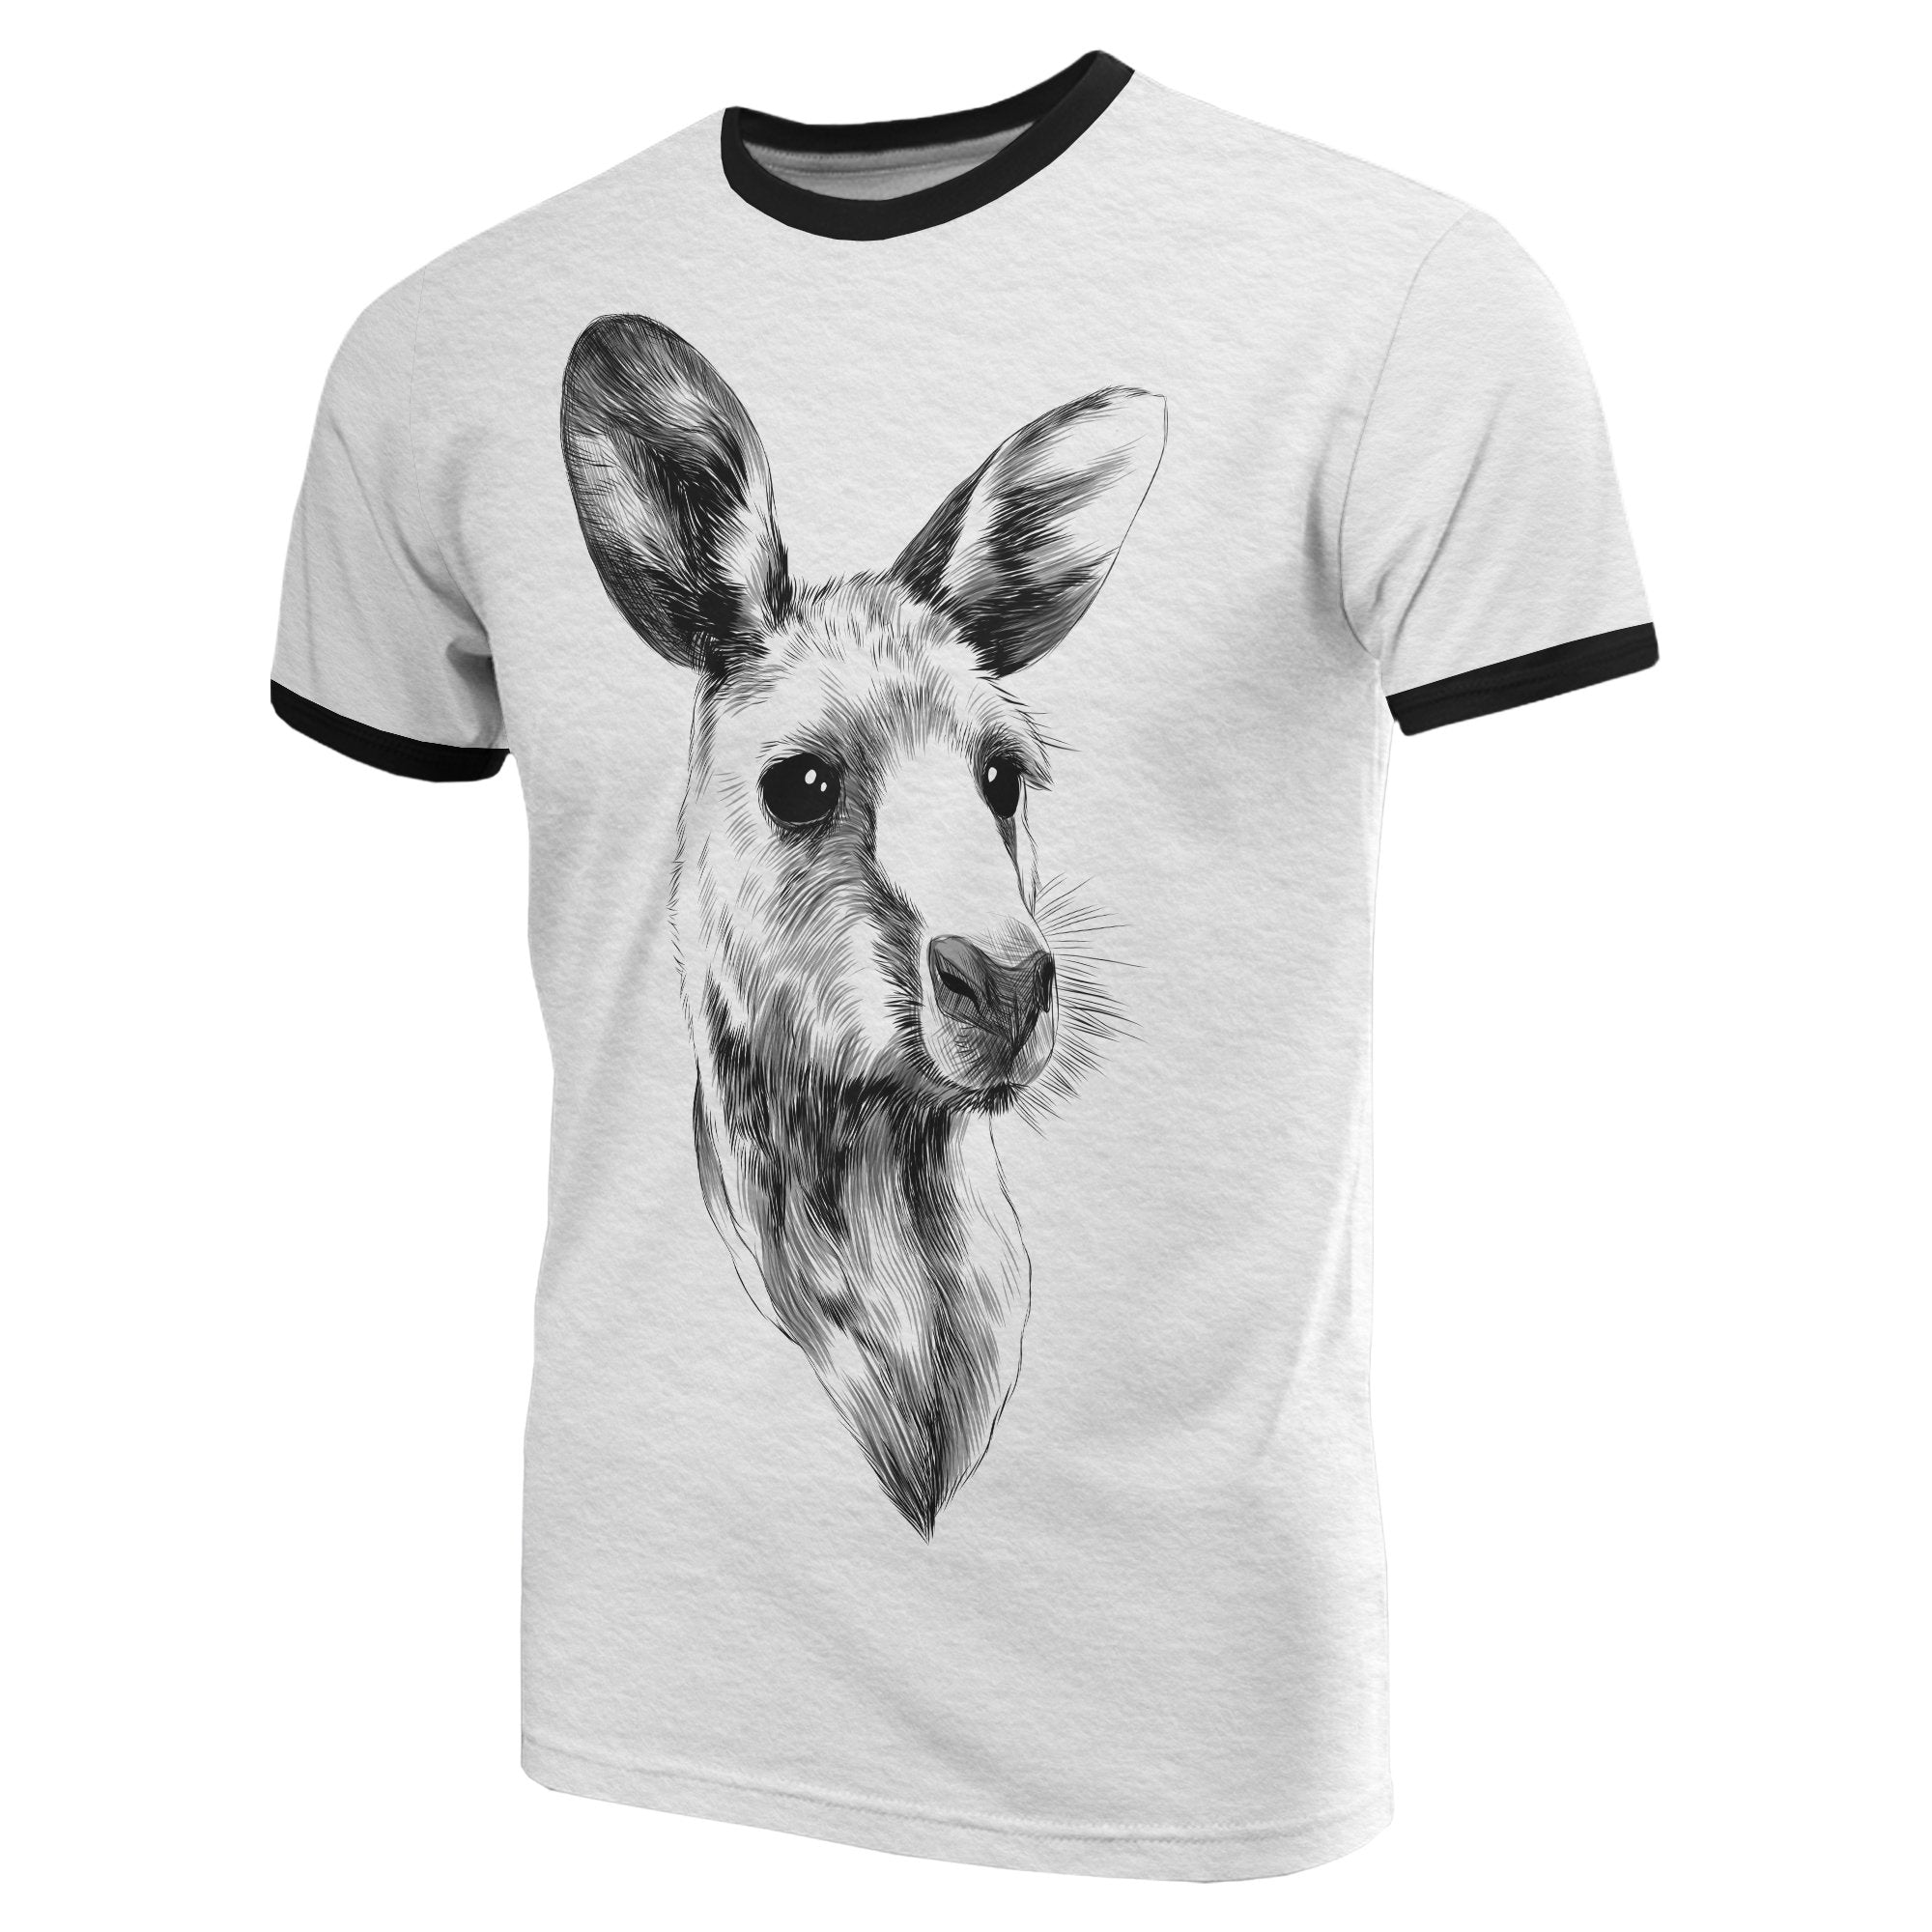 t-shirt-kangaroo-t-shirt-drawing-style-unisex